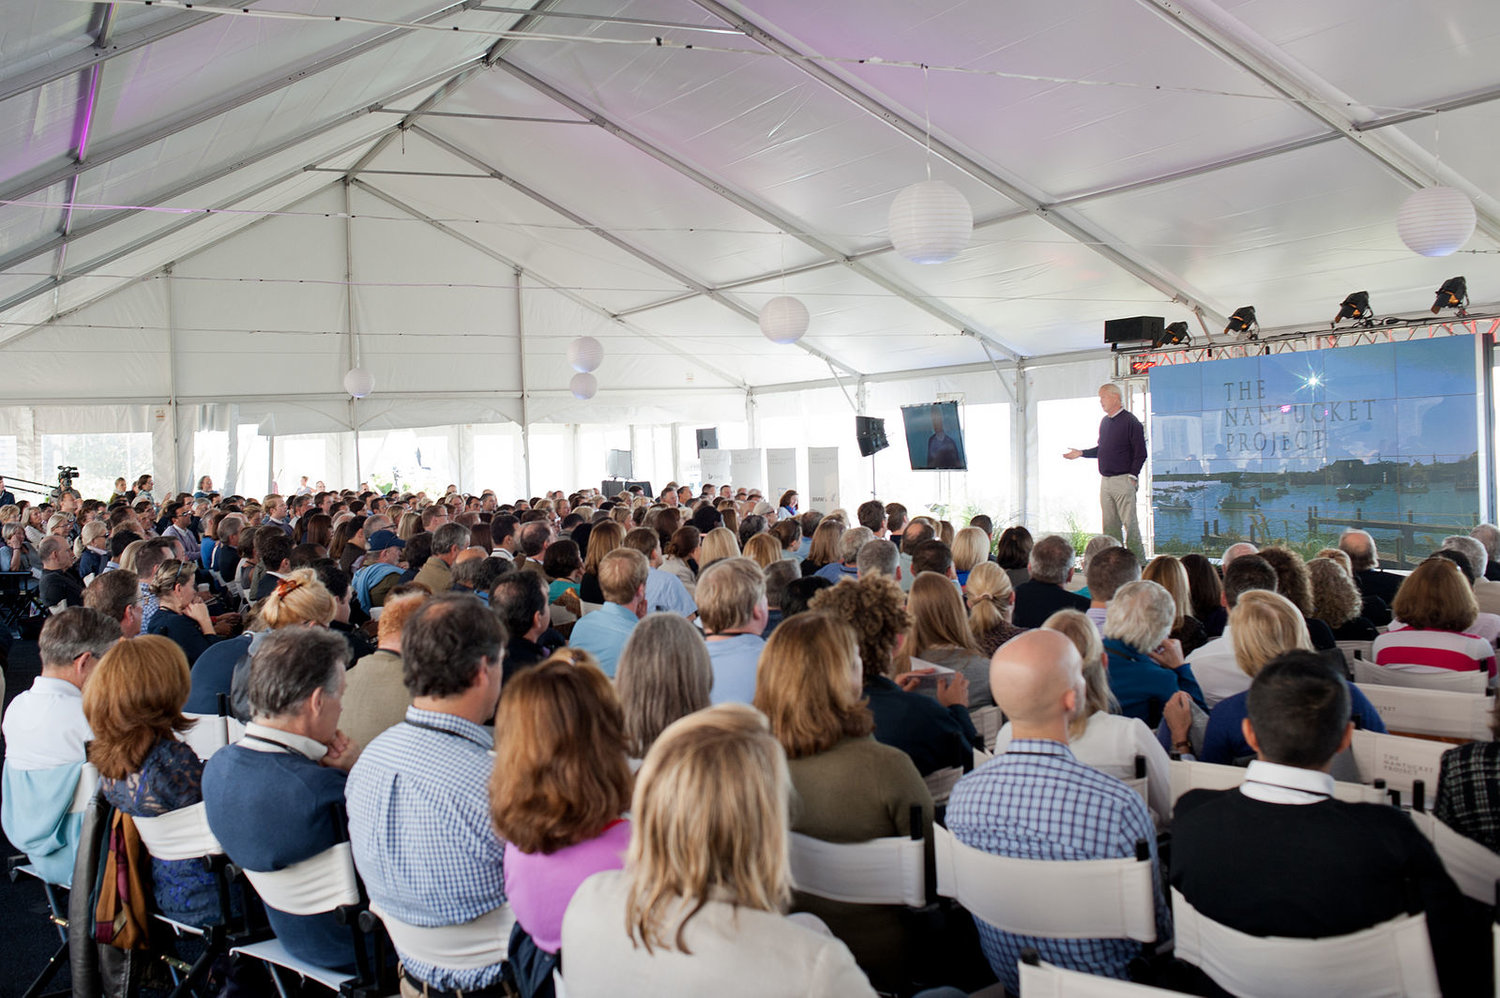 Chris Matthews speaks at the 2013 Nantucket Project.